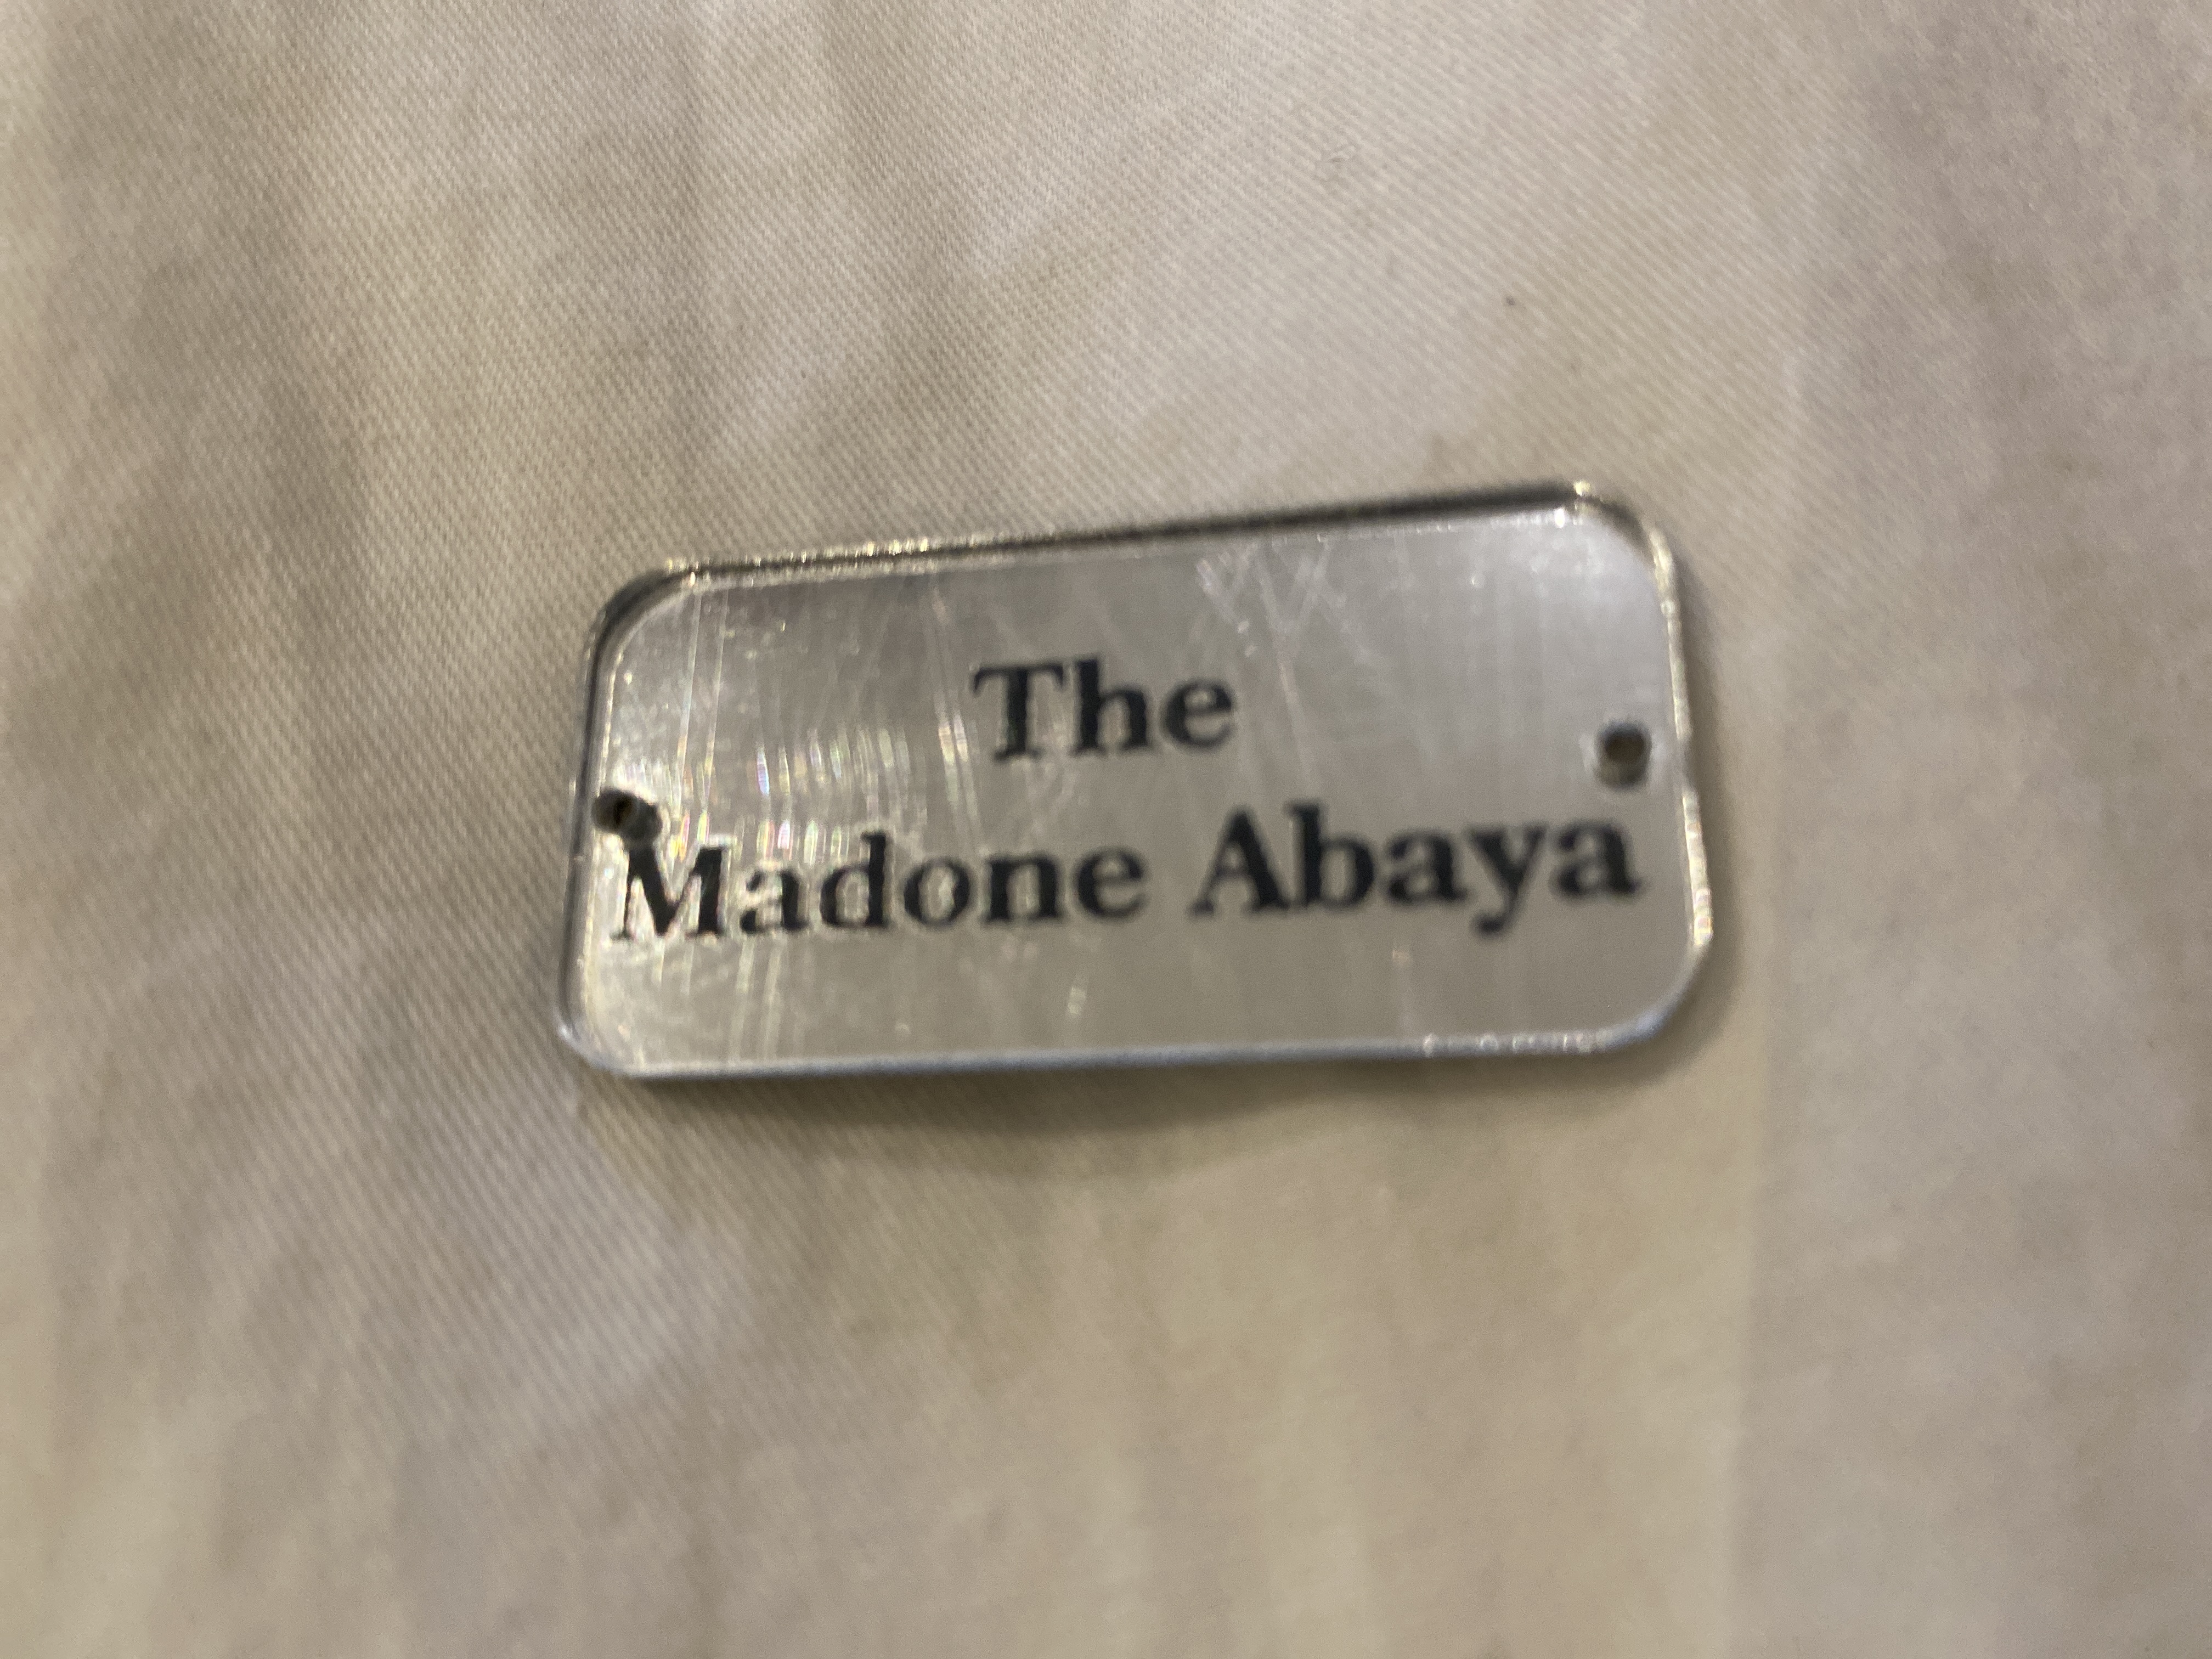 The Madone Abaya